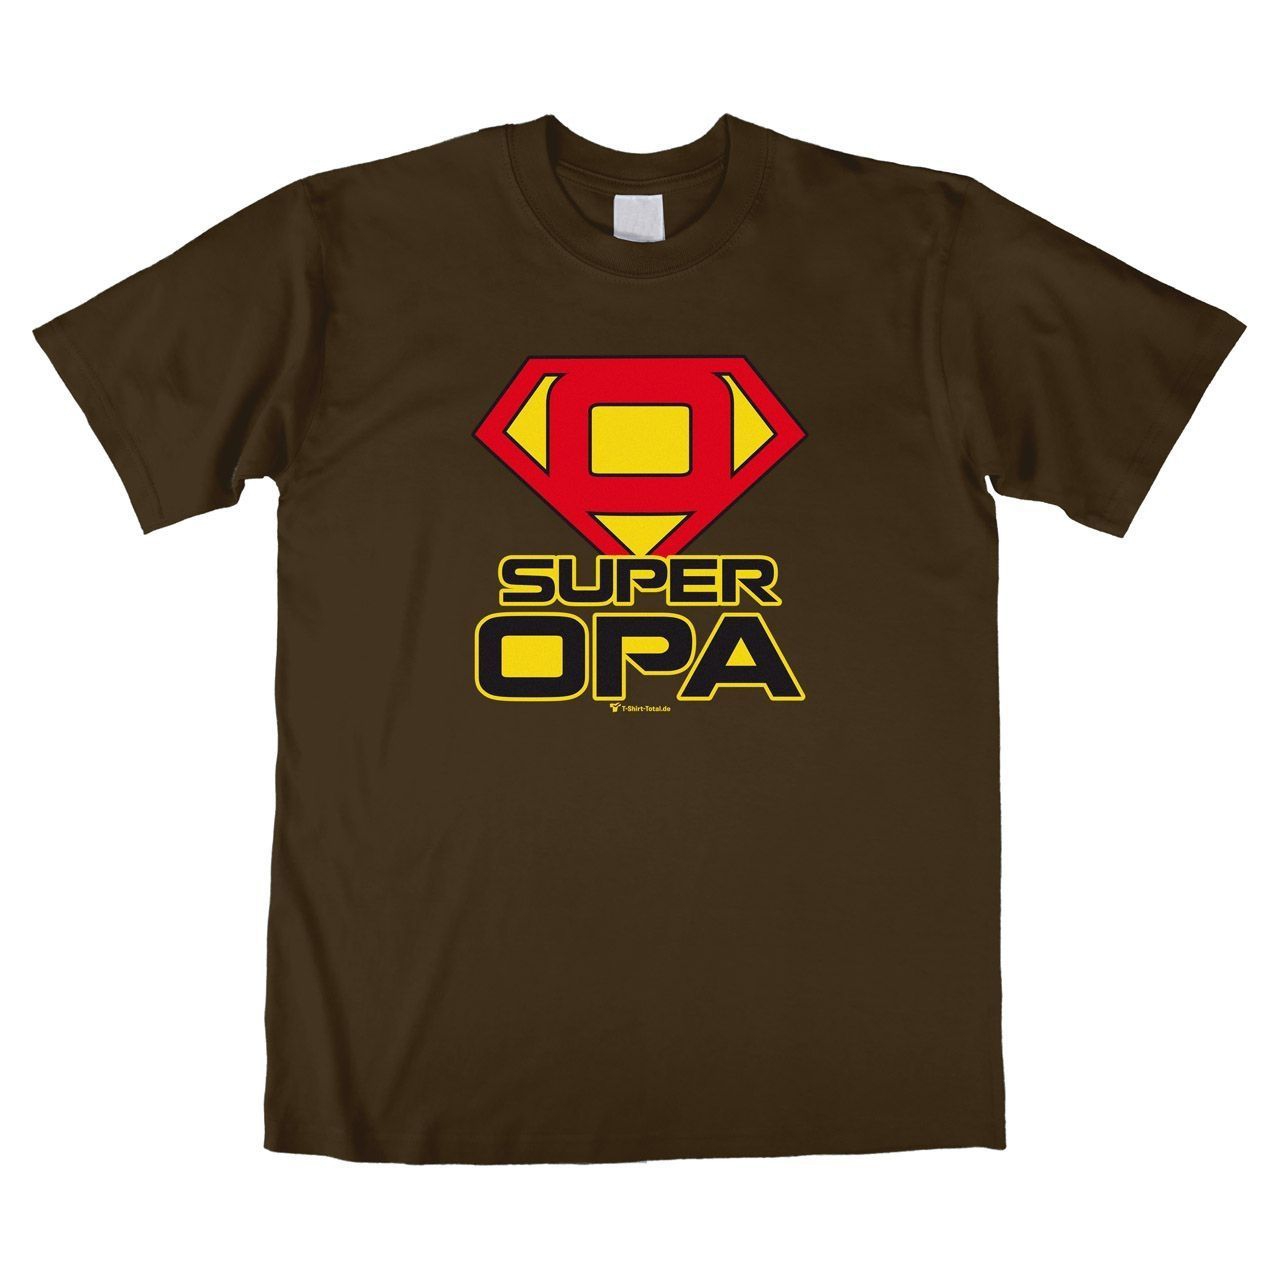 Super Opa Unisex T-Shirt braun Large